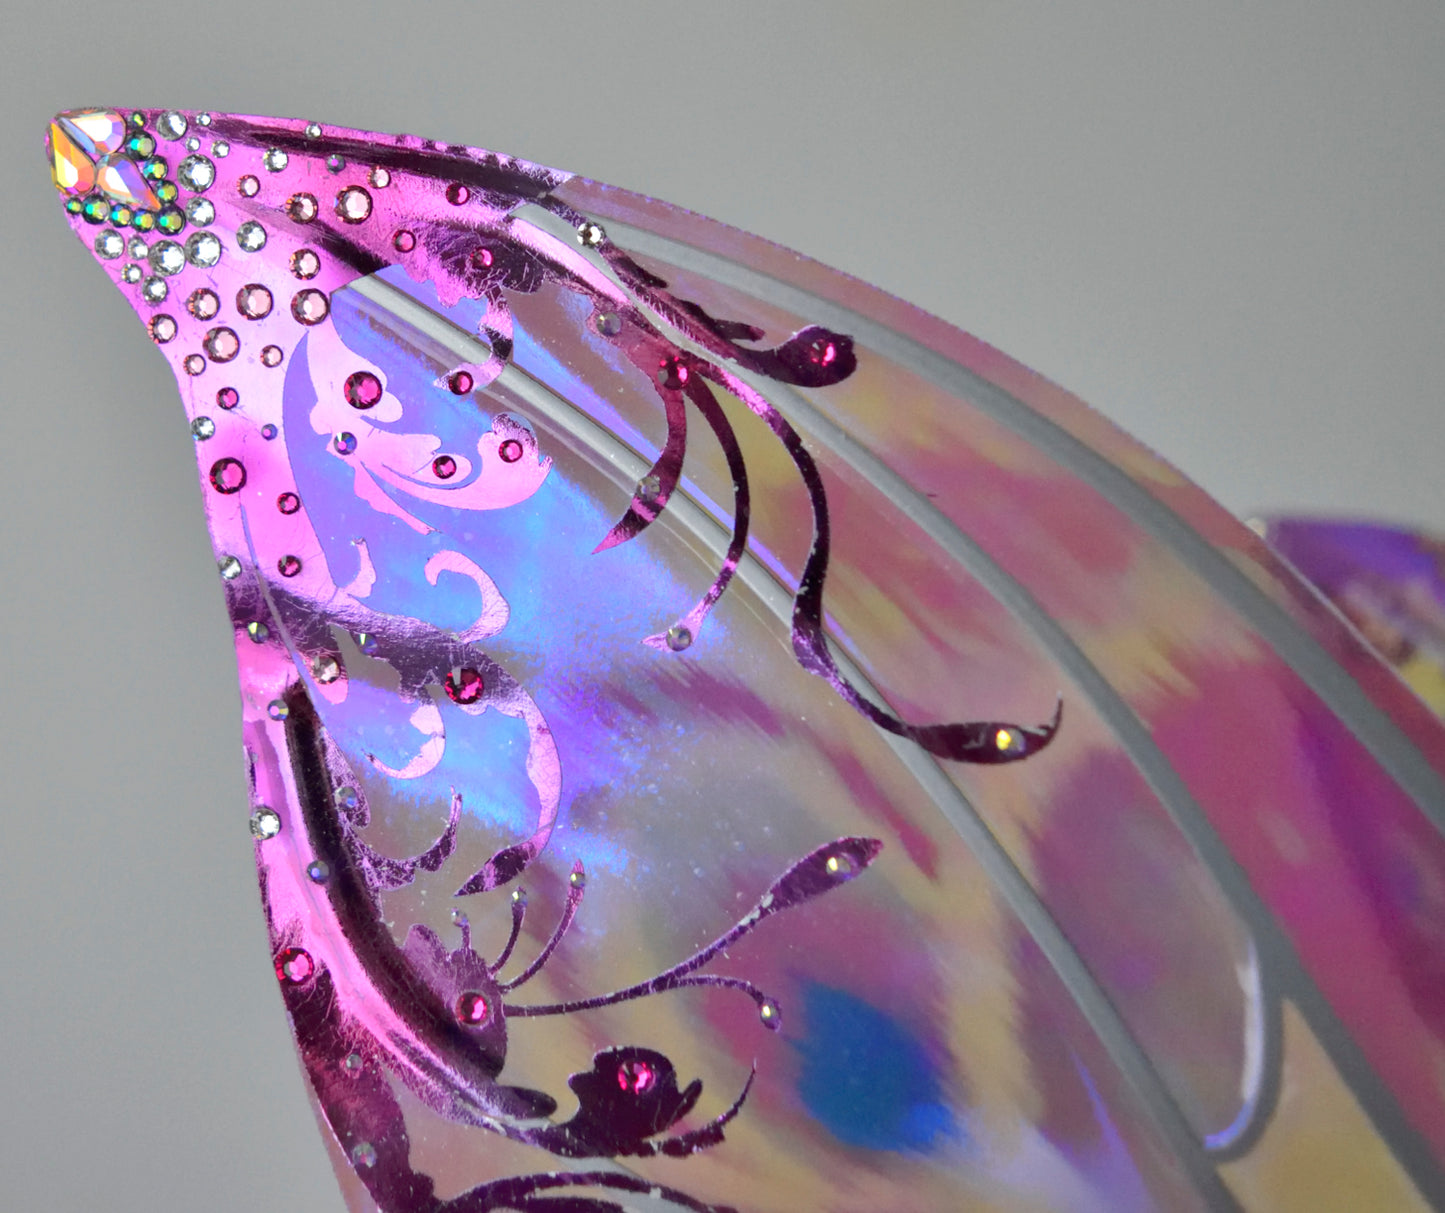 Elvina "Sugarplum" Gilded Iridescent Convertible Fairy Wings with Swarovski Crystals